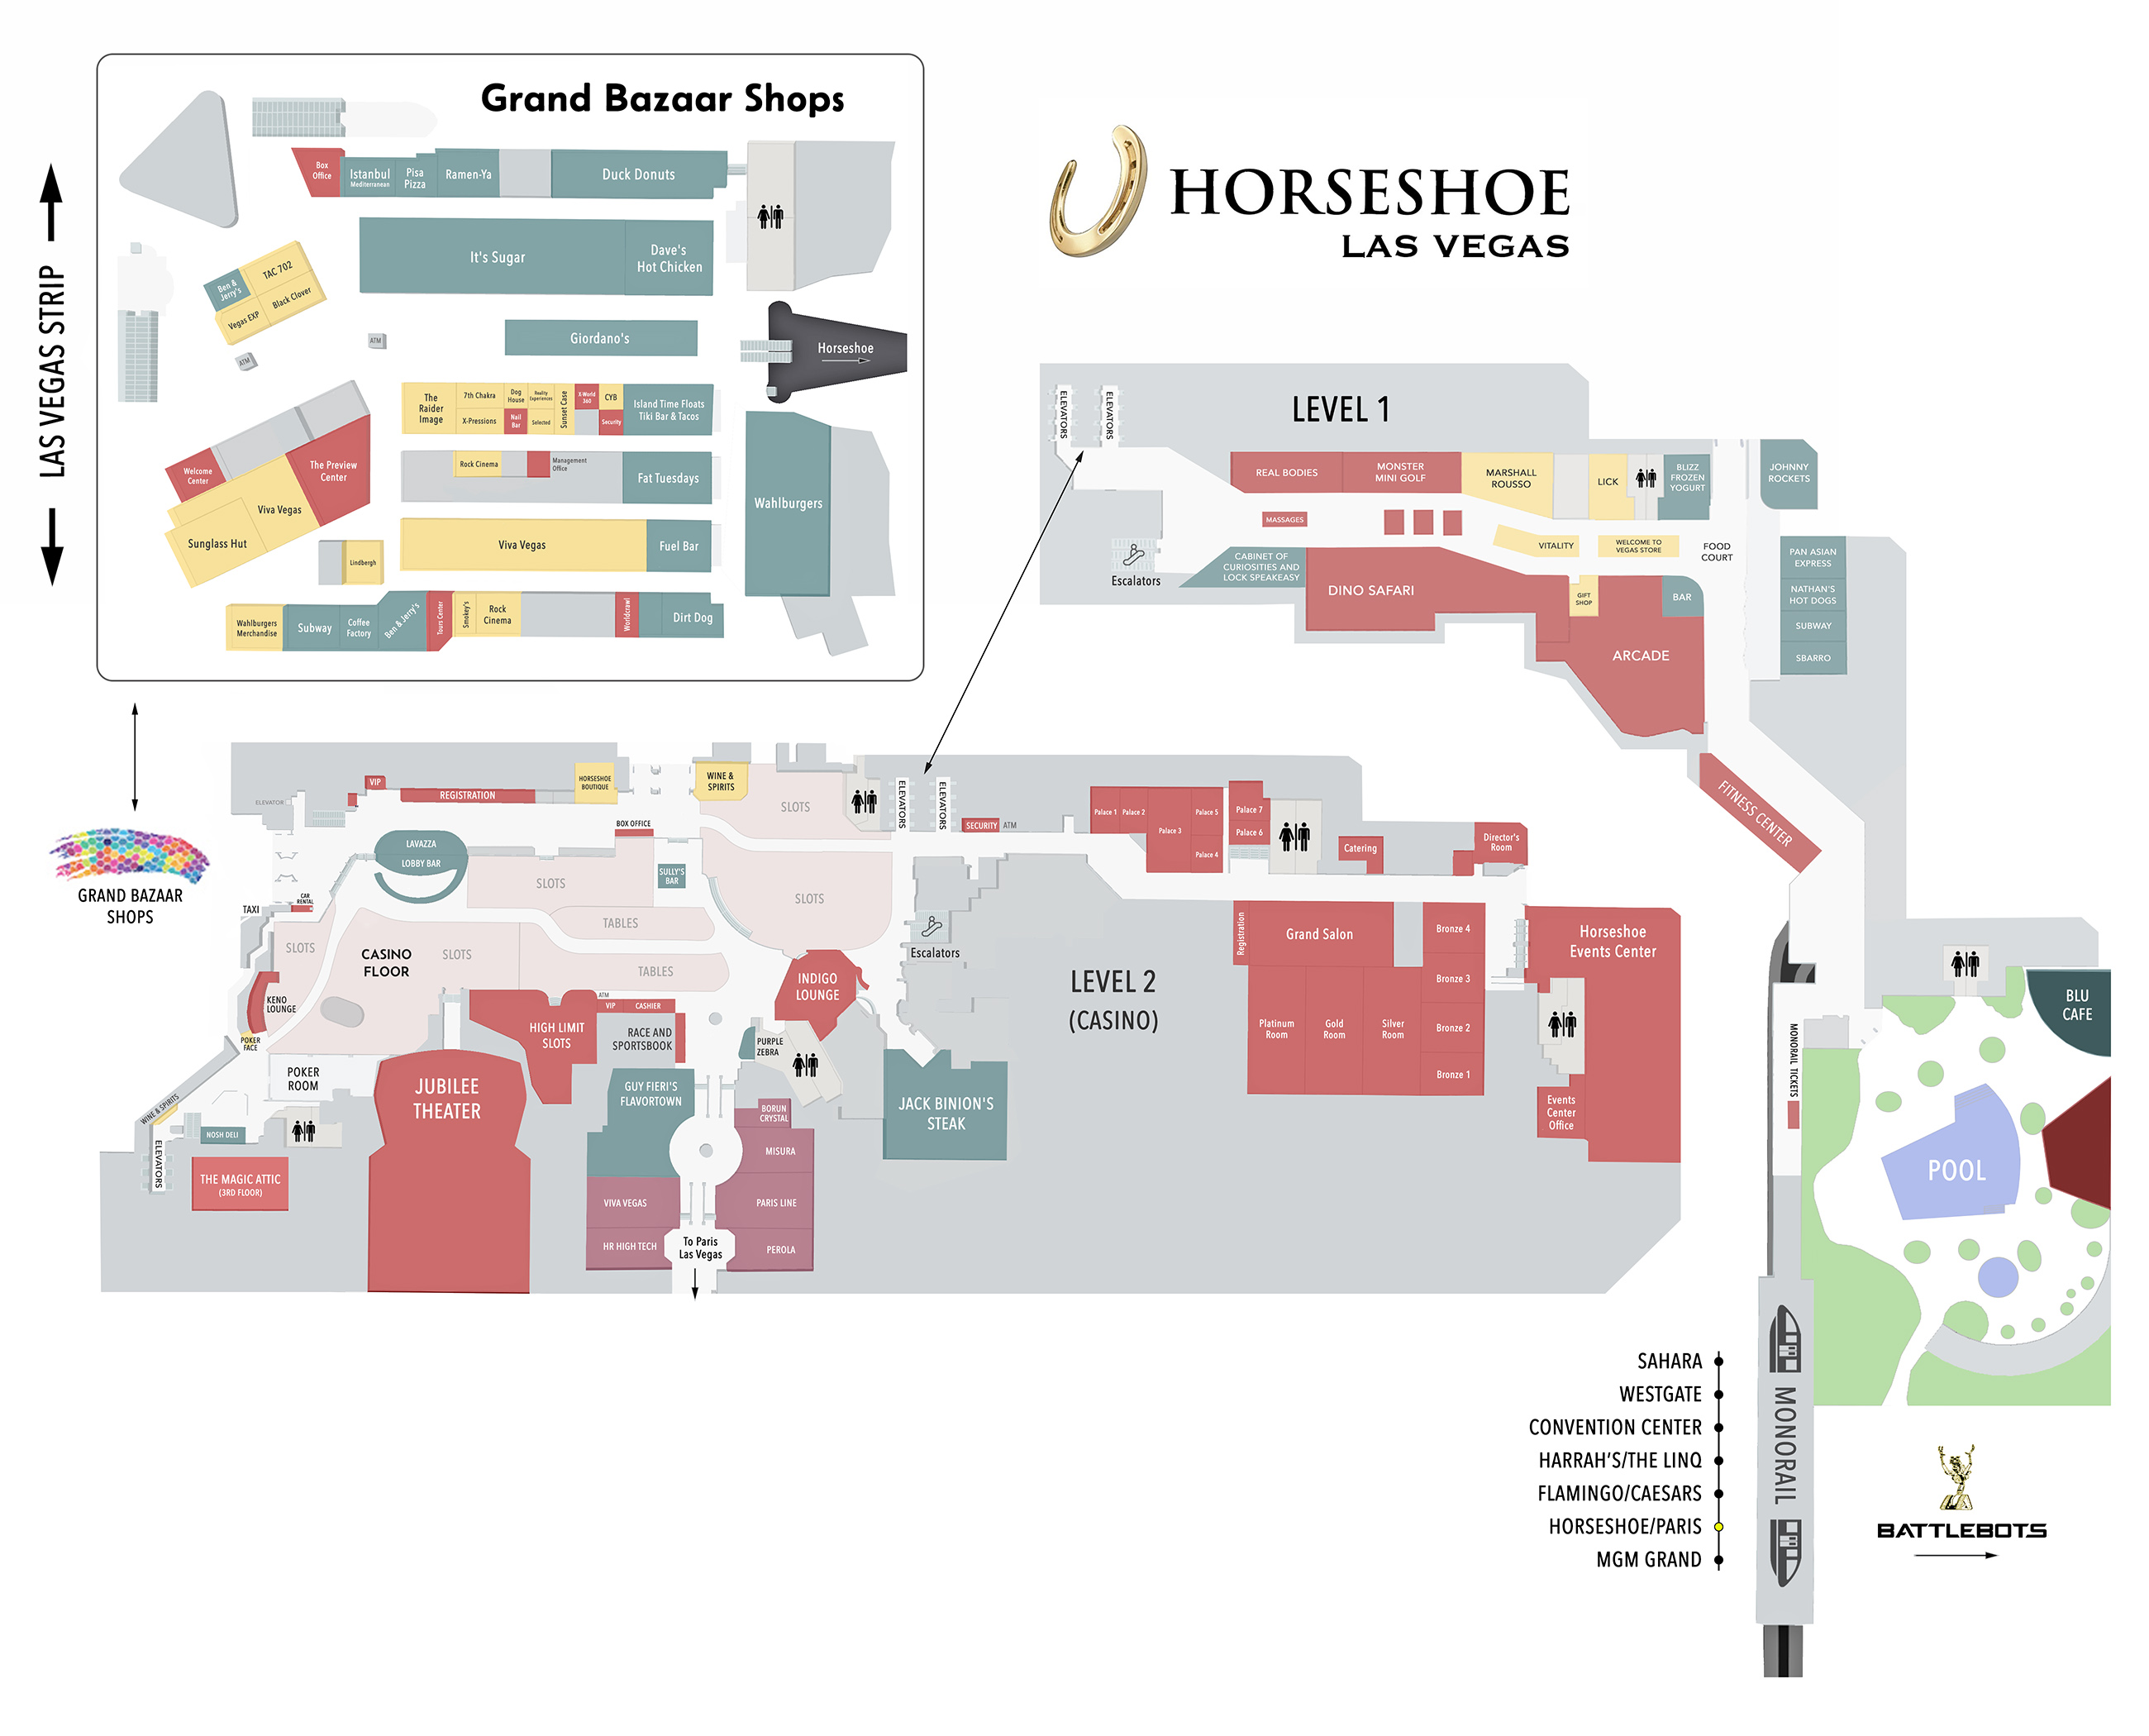 Bally's Casino Property Map & Floor Plans Las Vegas